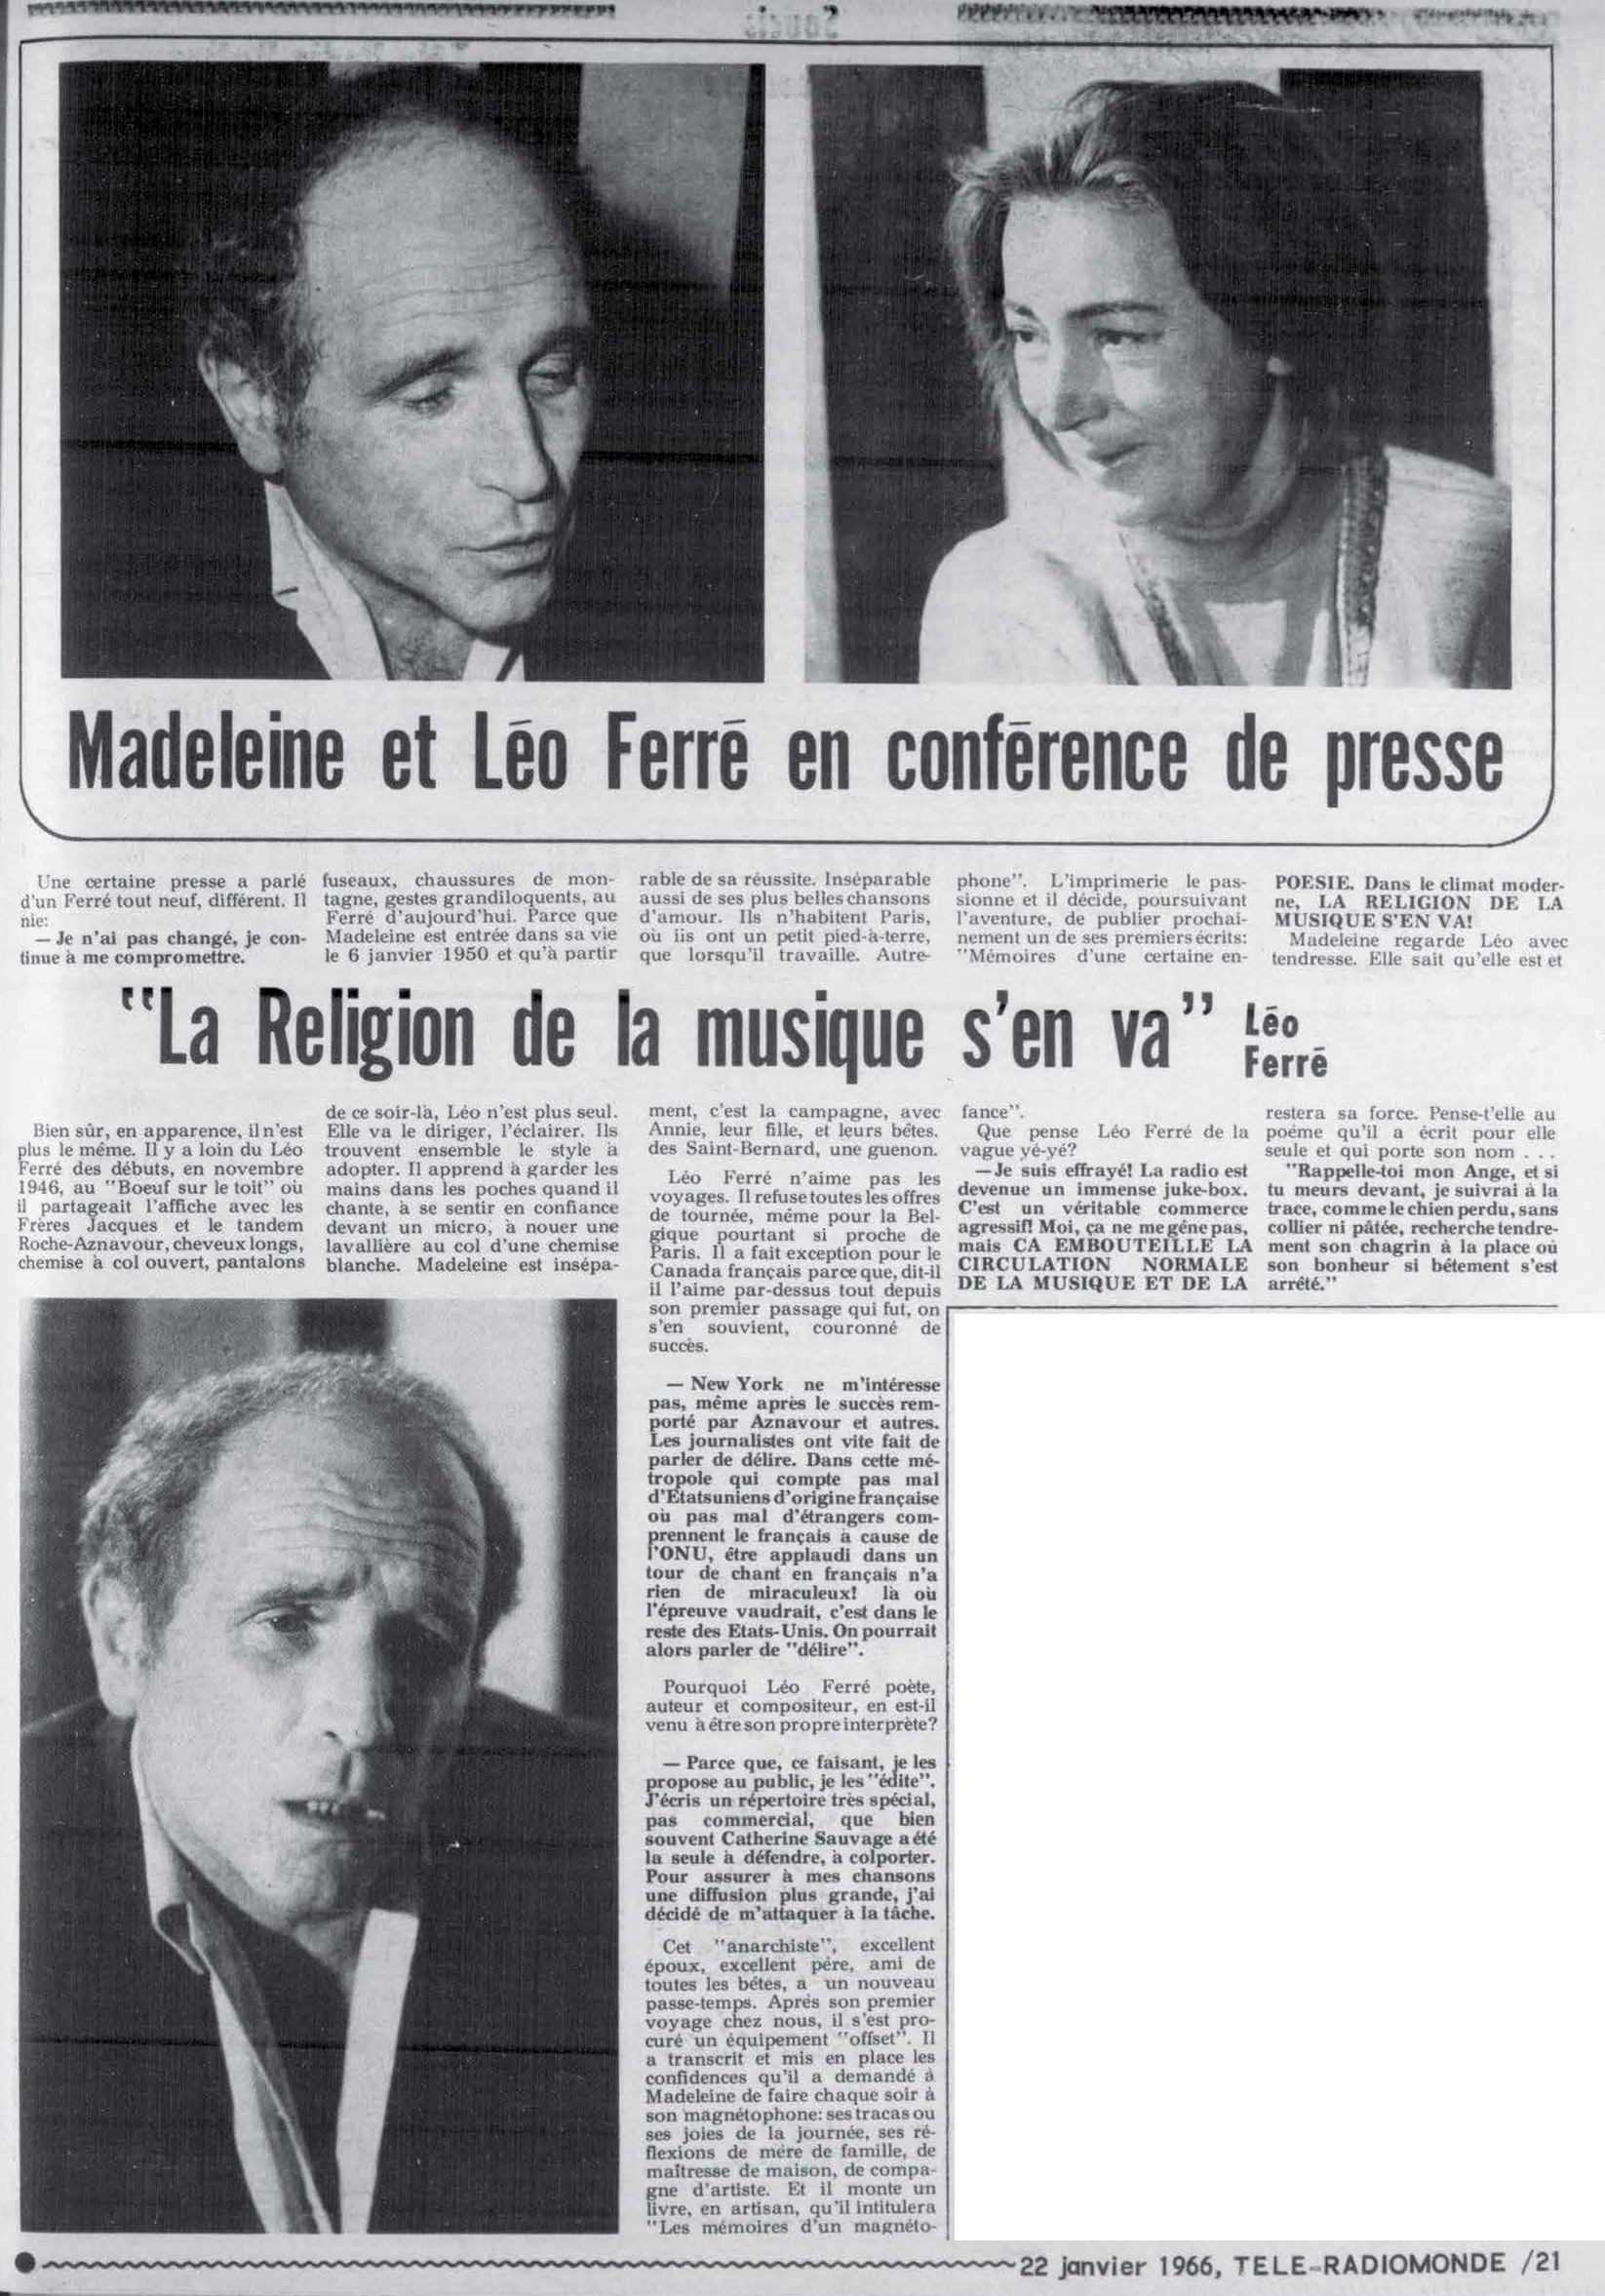 Léo Ferré - Télé-radiomonde, 1962-1985, samedi 22 janvier 1966